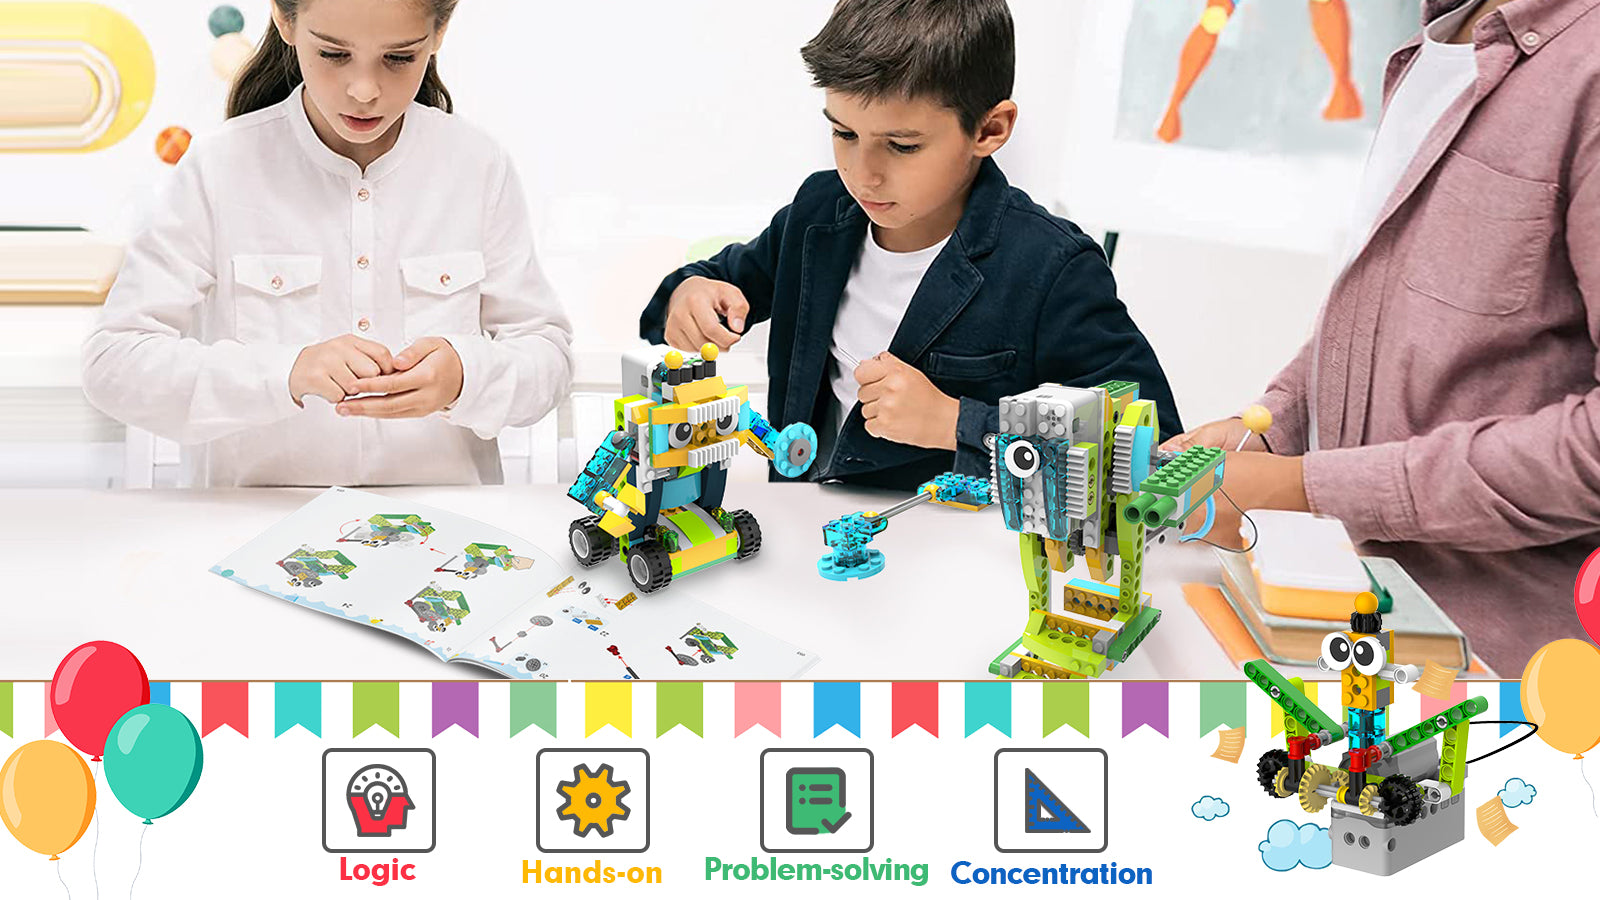 Makerzoid MACHINIST 100-in-1 Building Robot Toys STEM Educational Robotics Kit Learning Kit, Building Blocks Toy for Kids